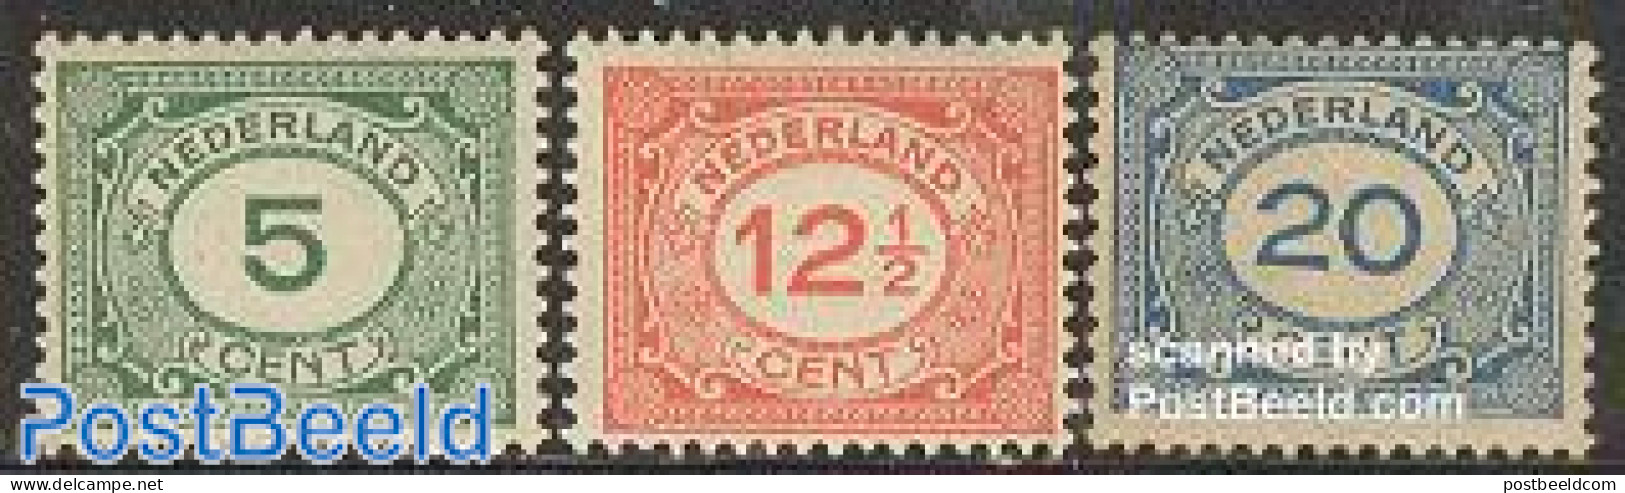 Netherlands 1921 Definitives 3v, Unused (hinged) - Unused Stamps